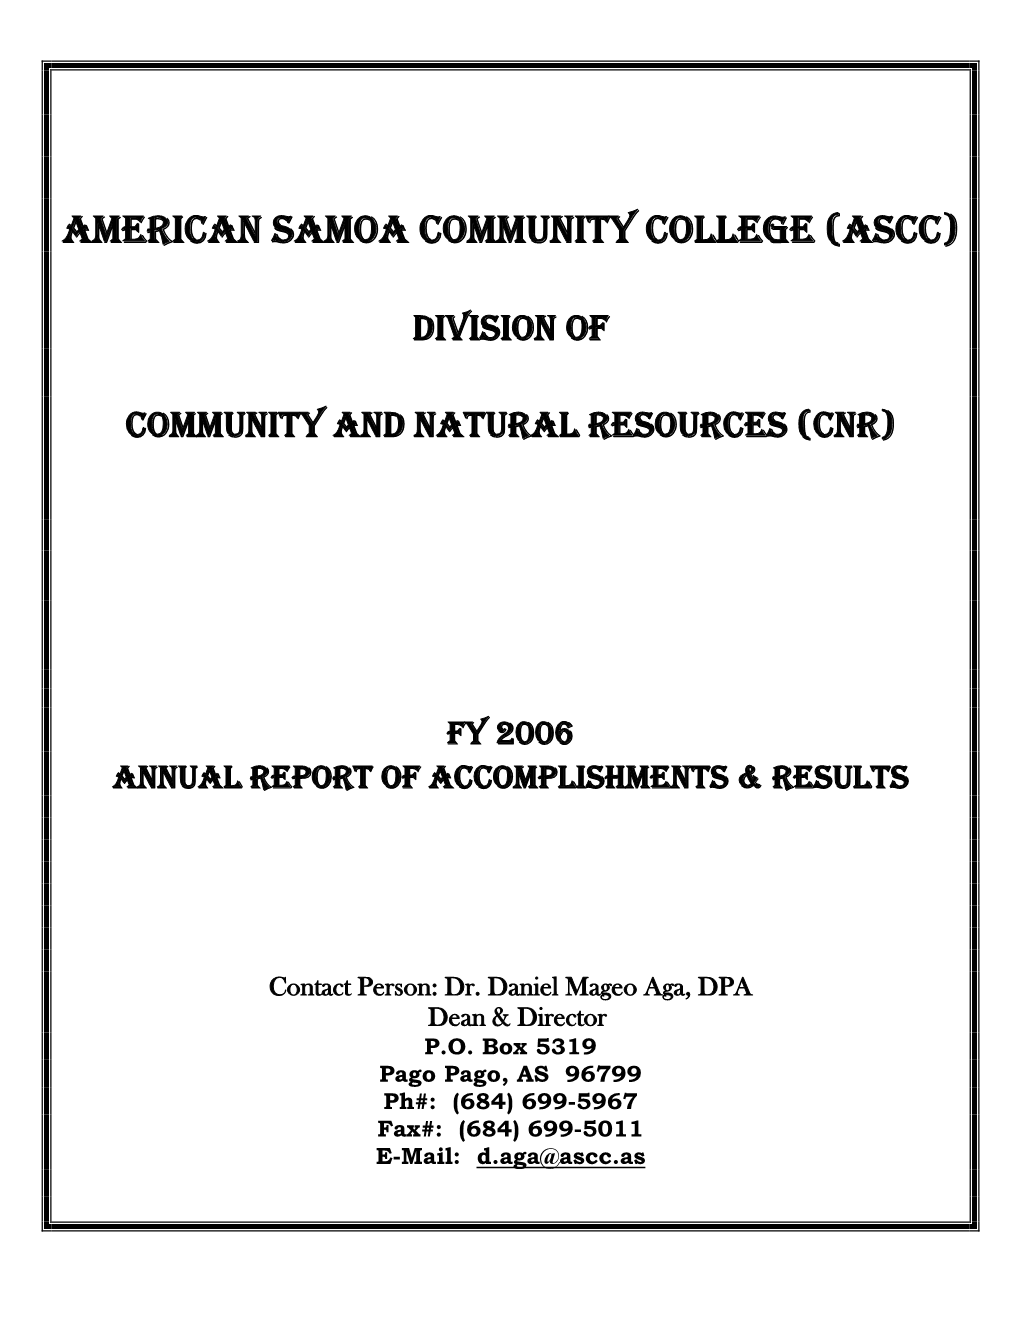 American Samoa Community College (Ascc)